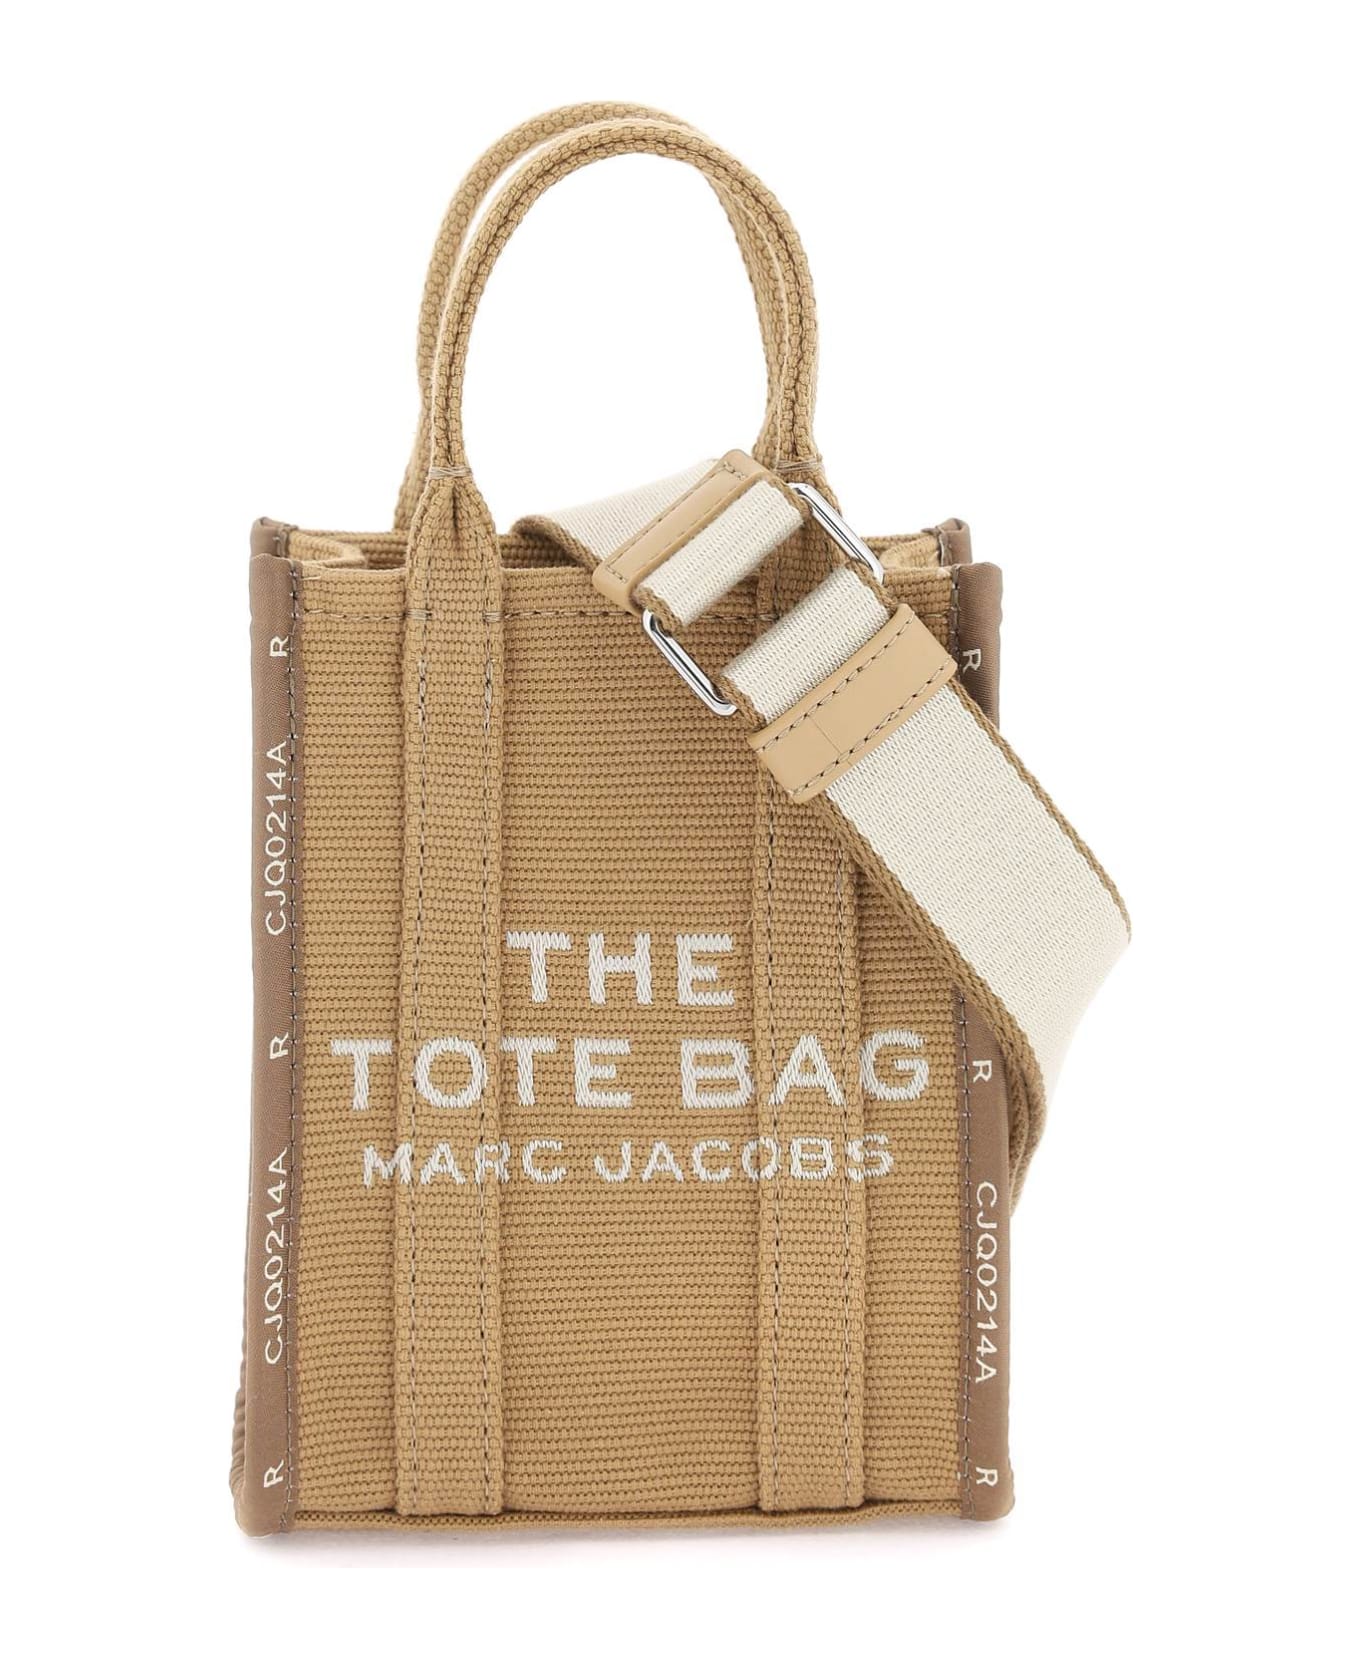 Marc Jacobs The Tote Mini Bag - Camel